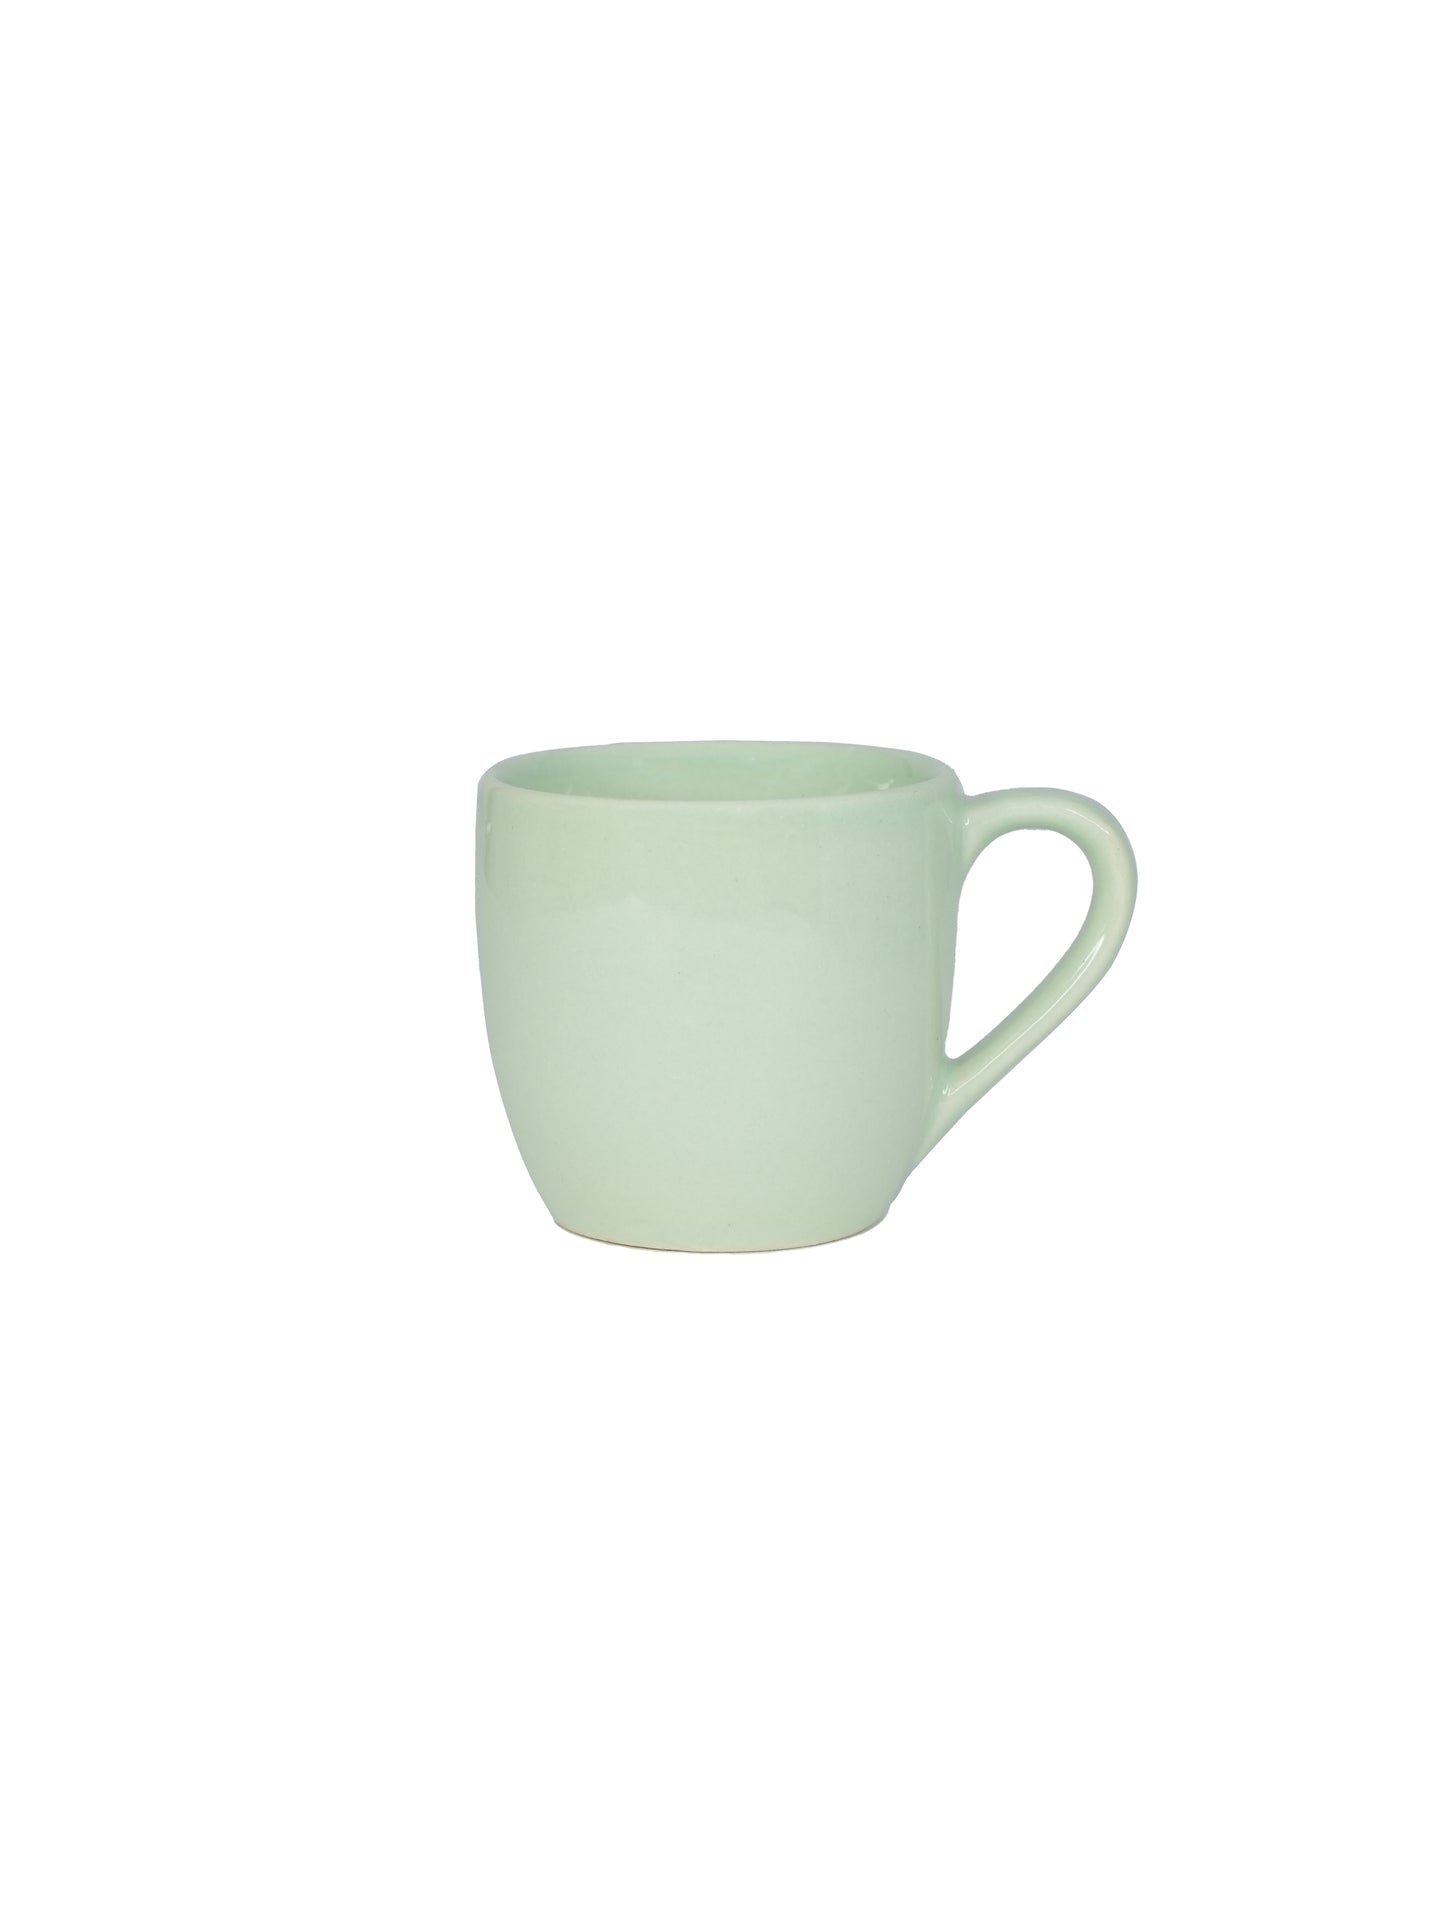 Ceramic Capicity 150ml Small Size Cups | Tea, Coffee, Milk Cup 7 cm Height X 9.5 cm Diameter (LR-CM-031)